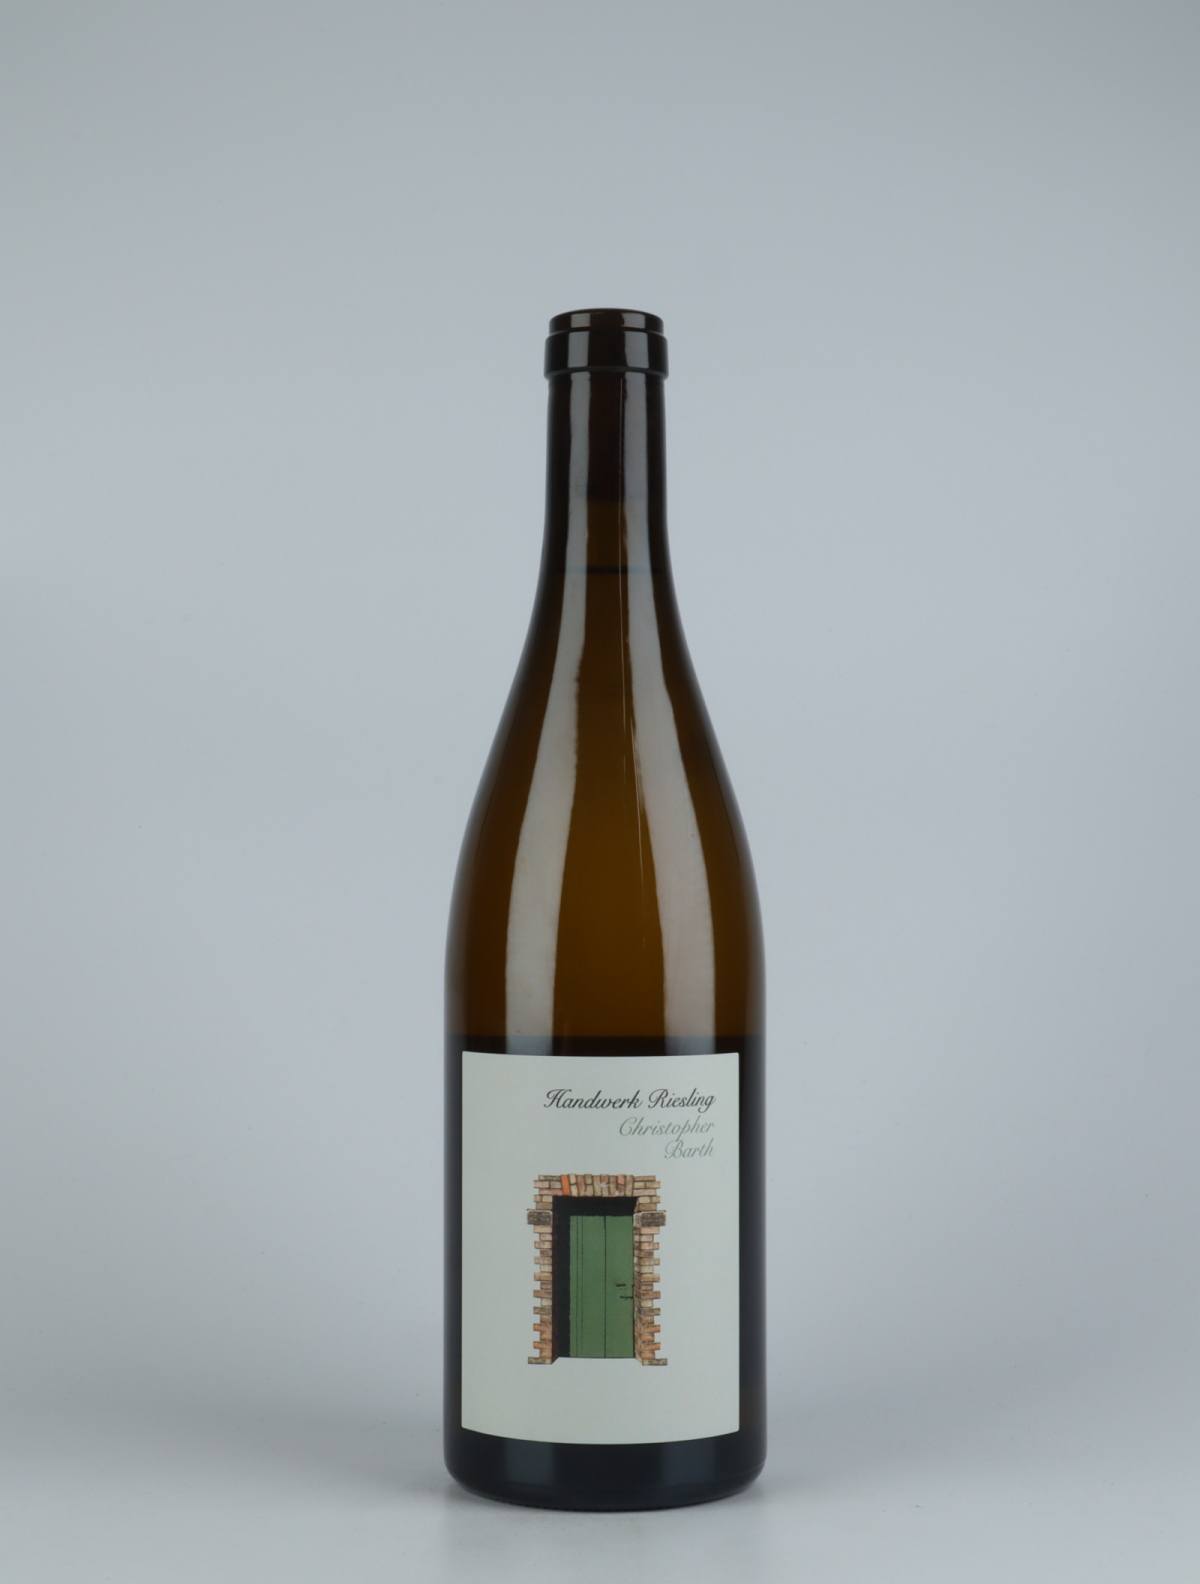 A bottle 2020 Handwerk Riesling White wine from , Rheinhessen in Germany